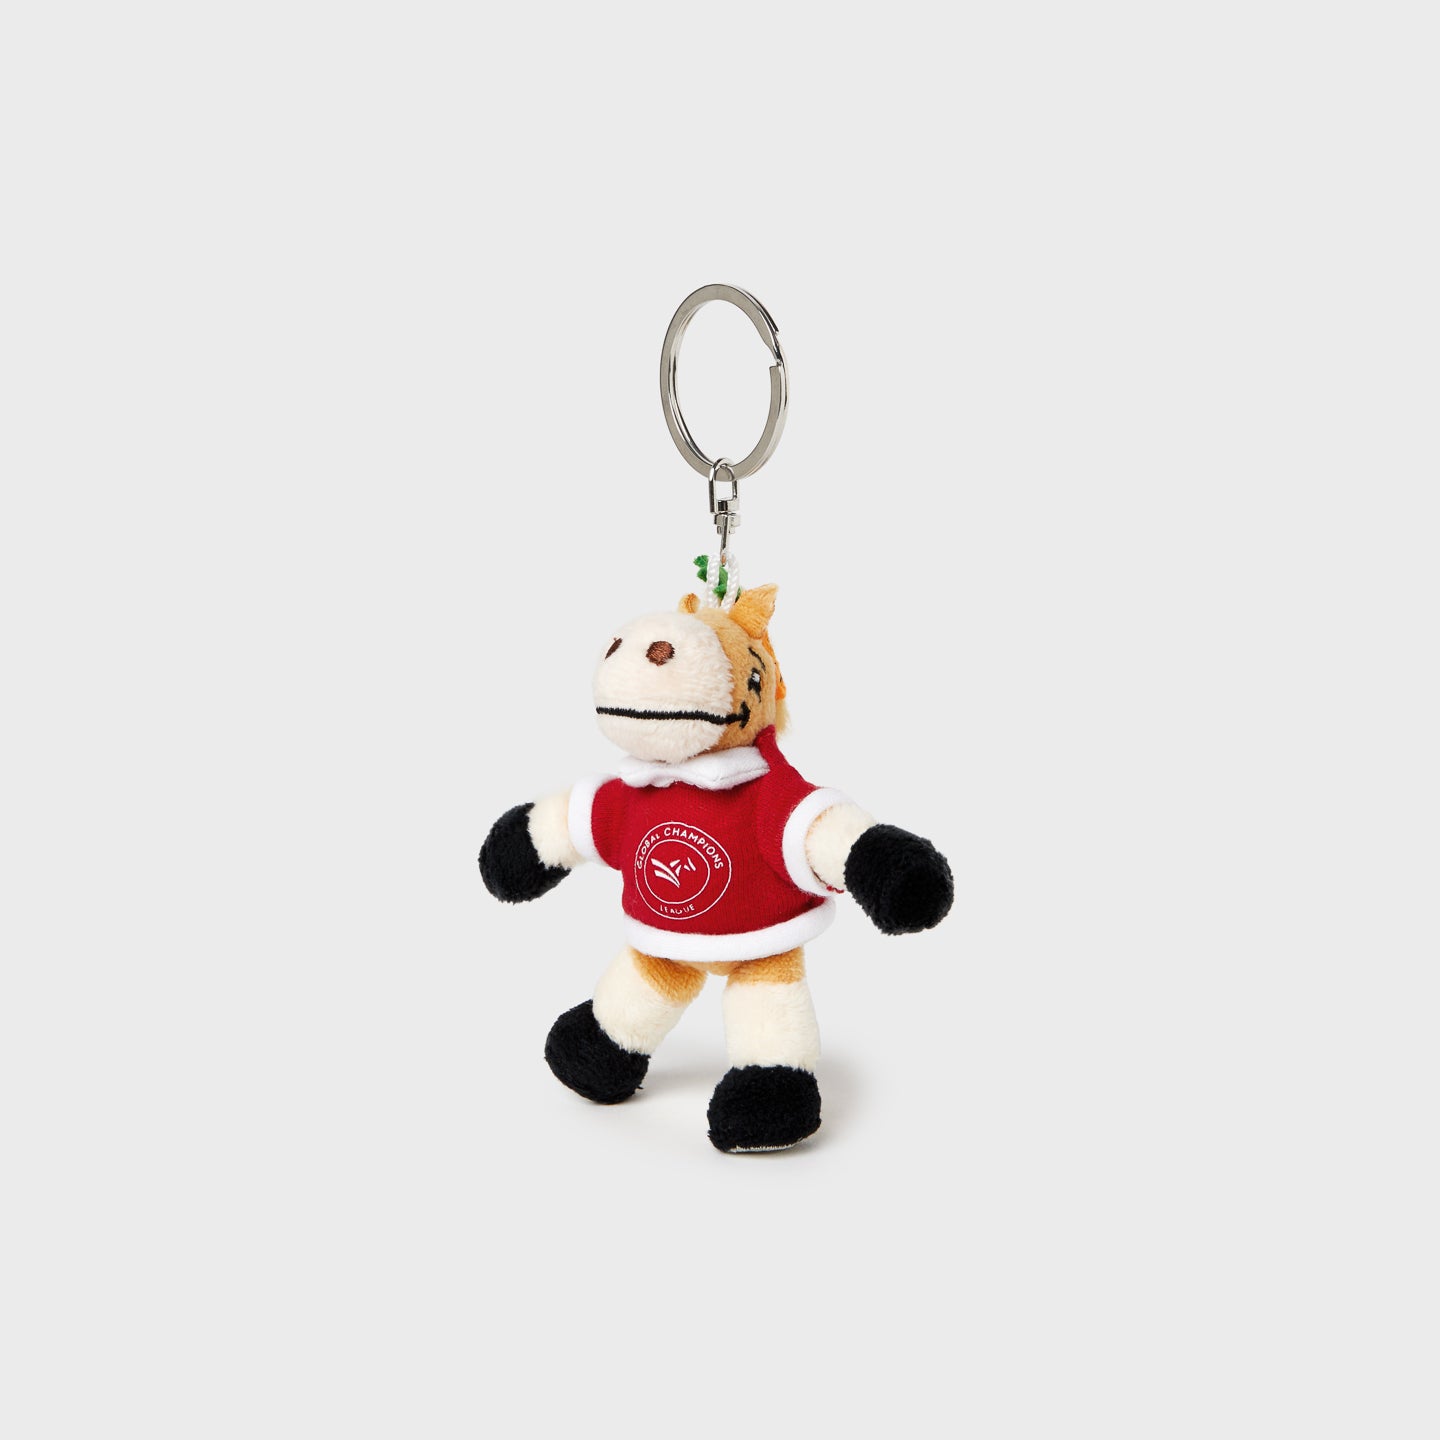 GCL Mascot Plush Toy Key Ring - Paco